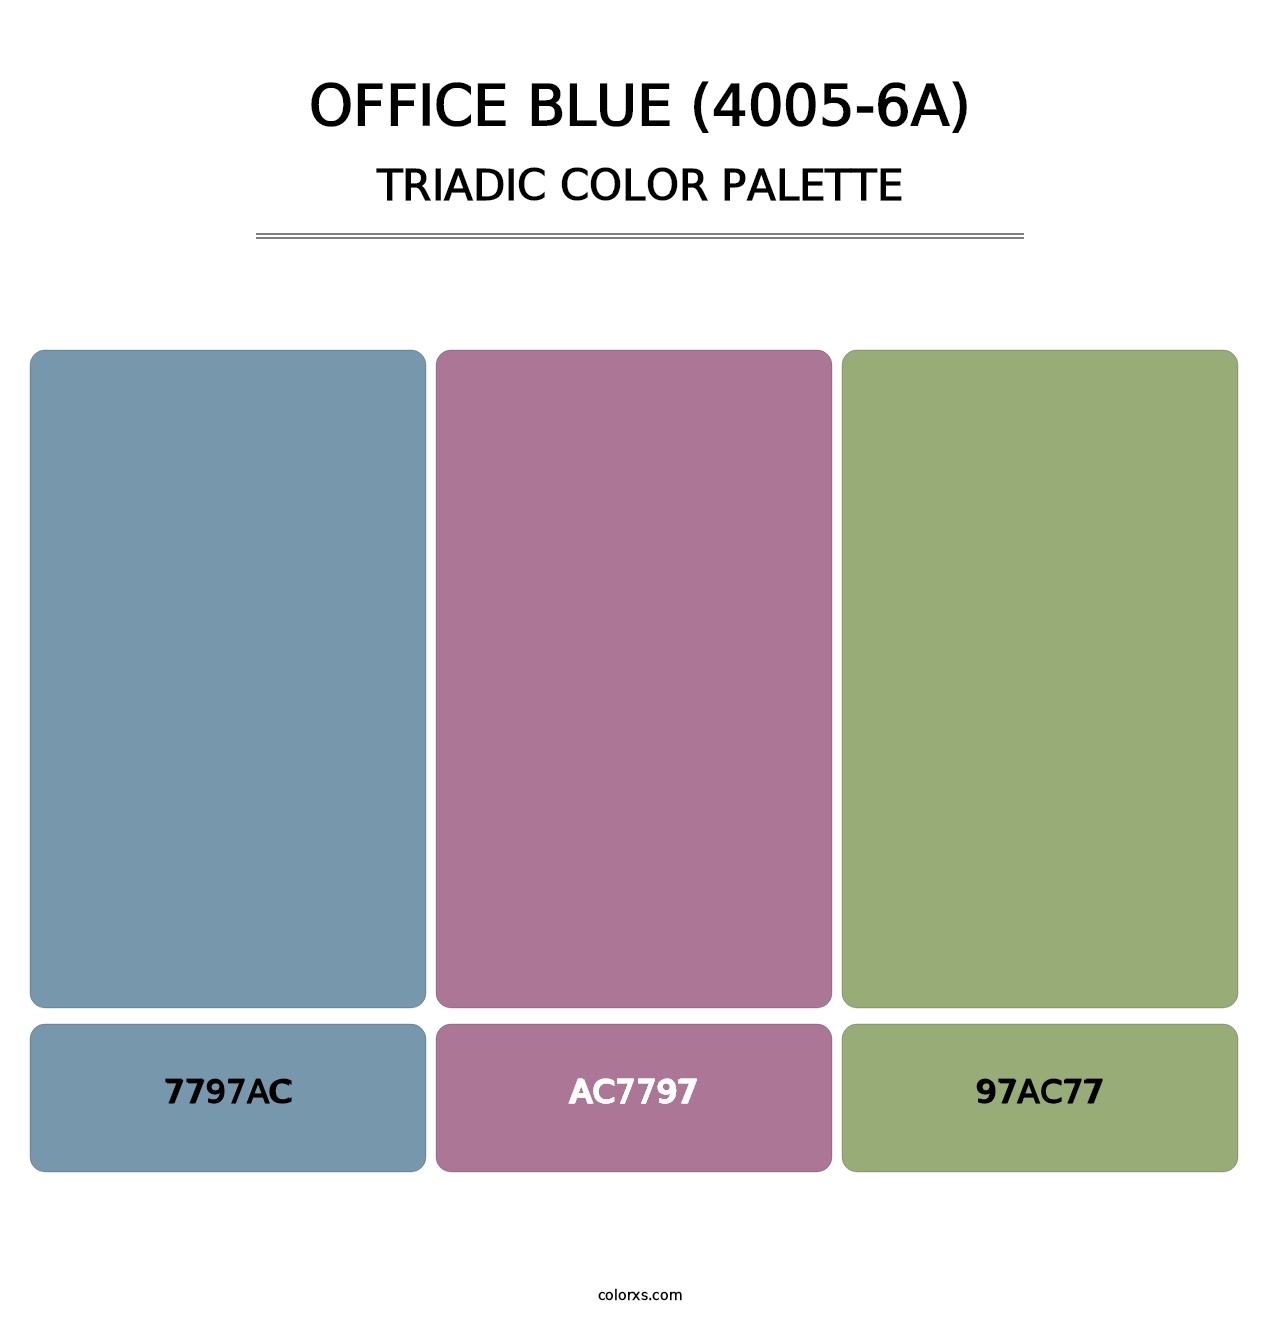 Office Blue (4005-6A) - Triadic Color Palette